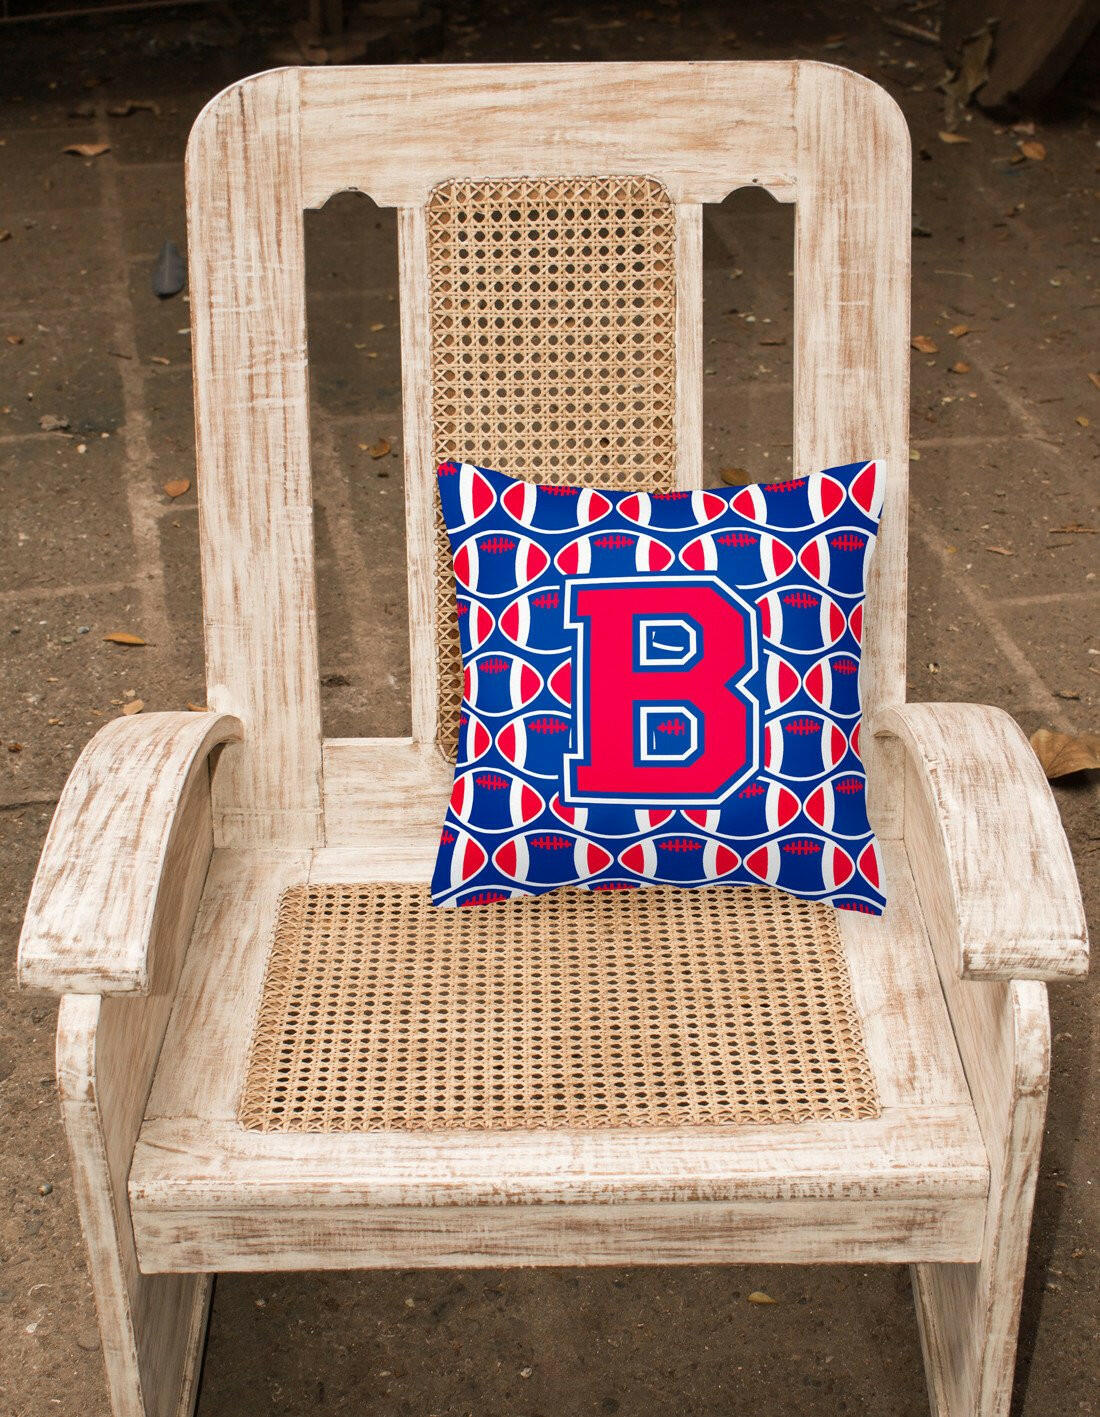 Letter B Football Harvard Crimson and Yale Blue Fabric Decorative Pillow CJ1076-BPW1414 by Caroline's Treasures